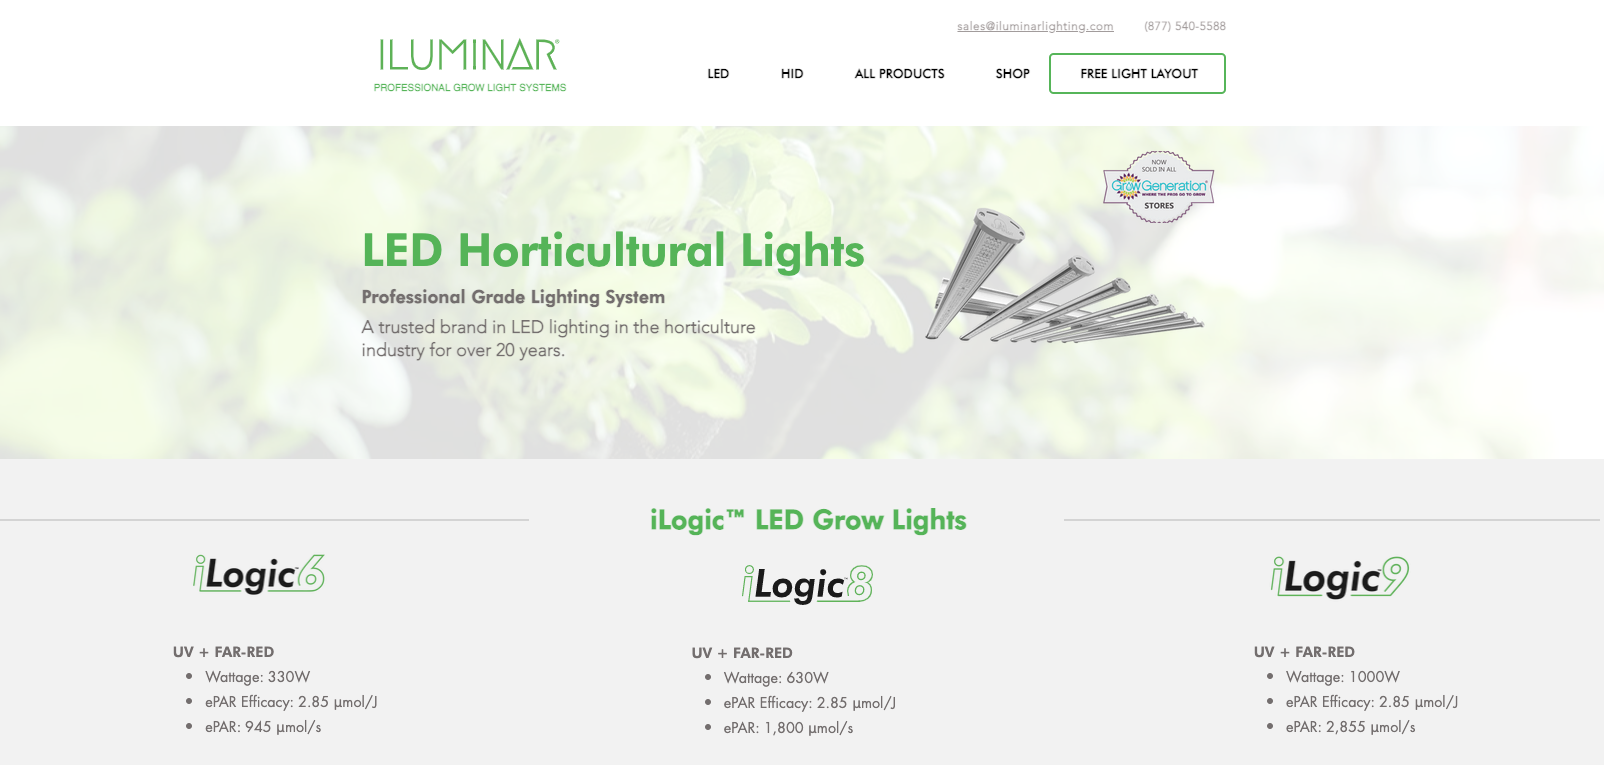 www.iluminarlighting.com